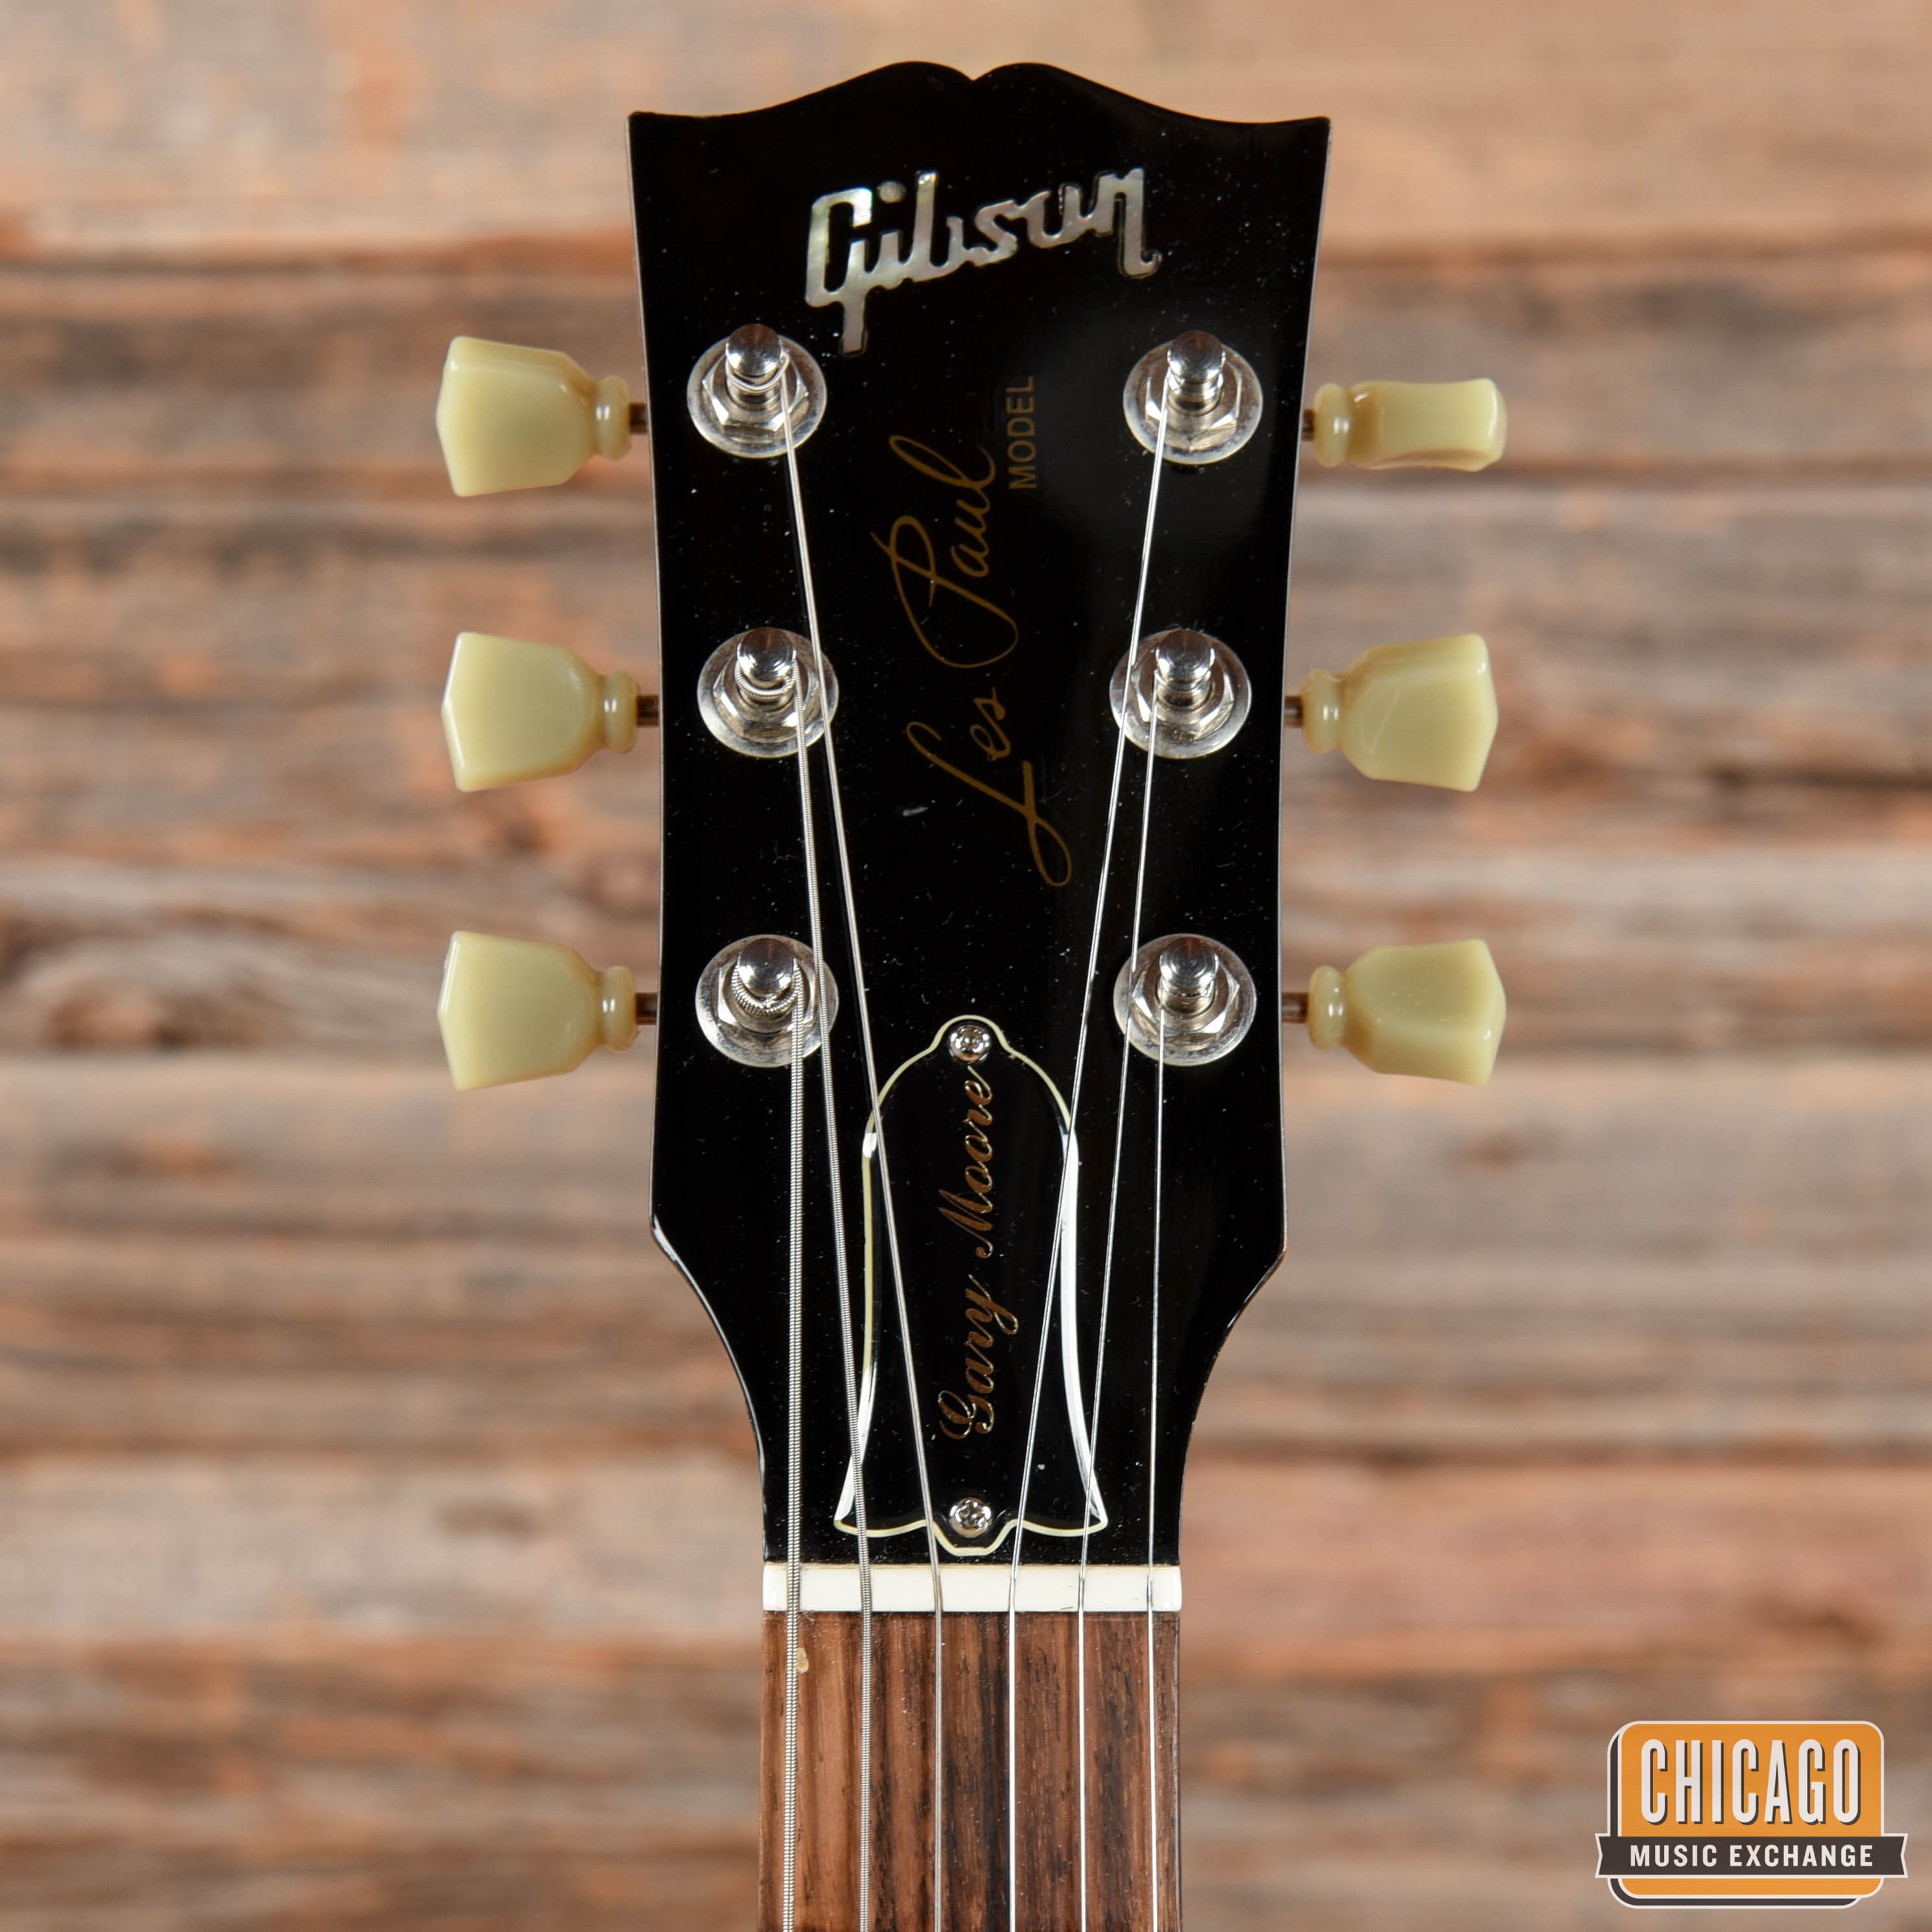 Gibson Les Paul Standard Gary Moore Signature 2001 Lemon Burst